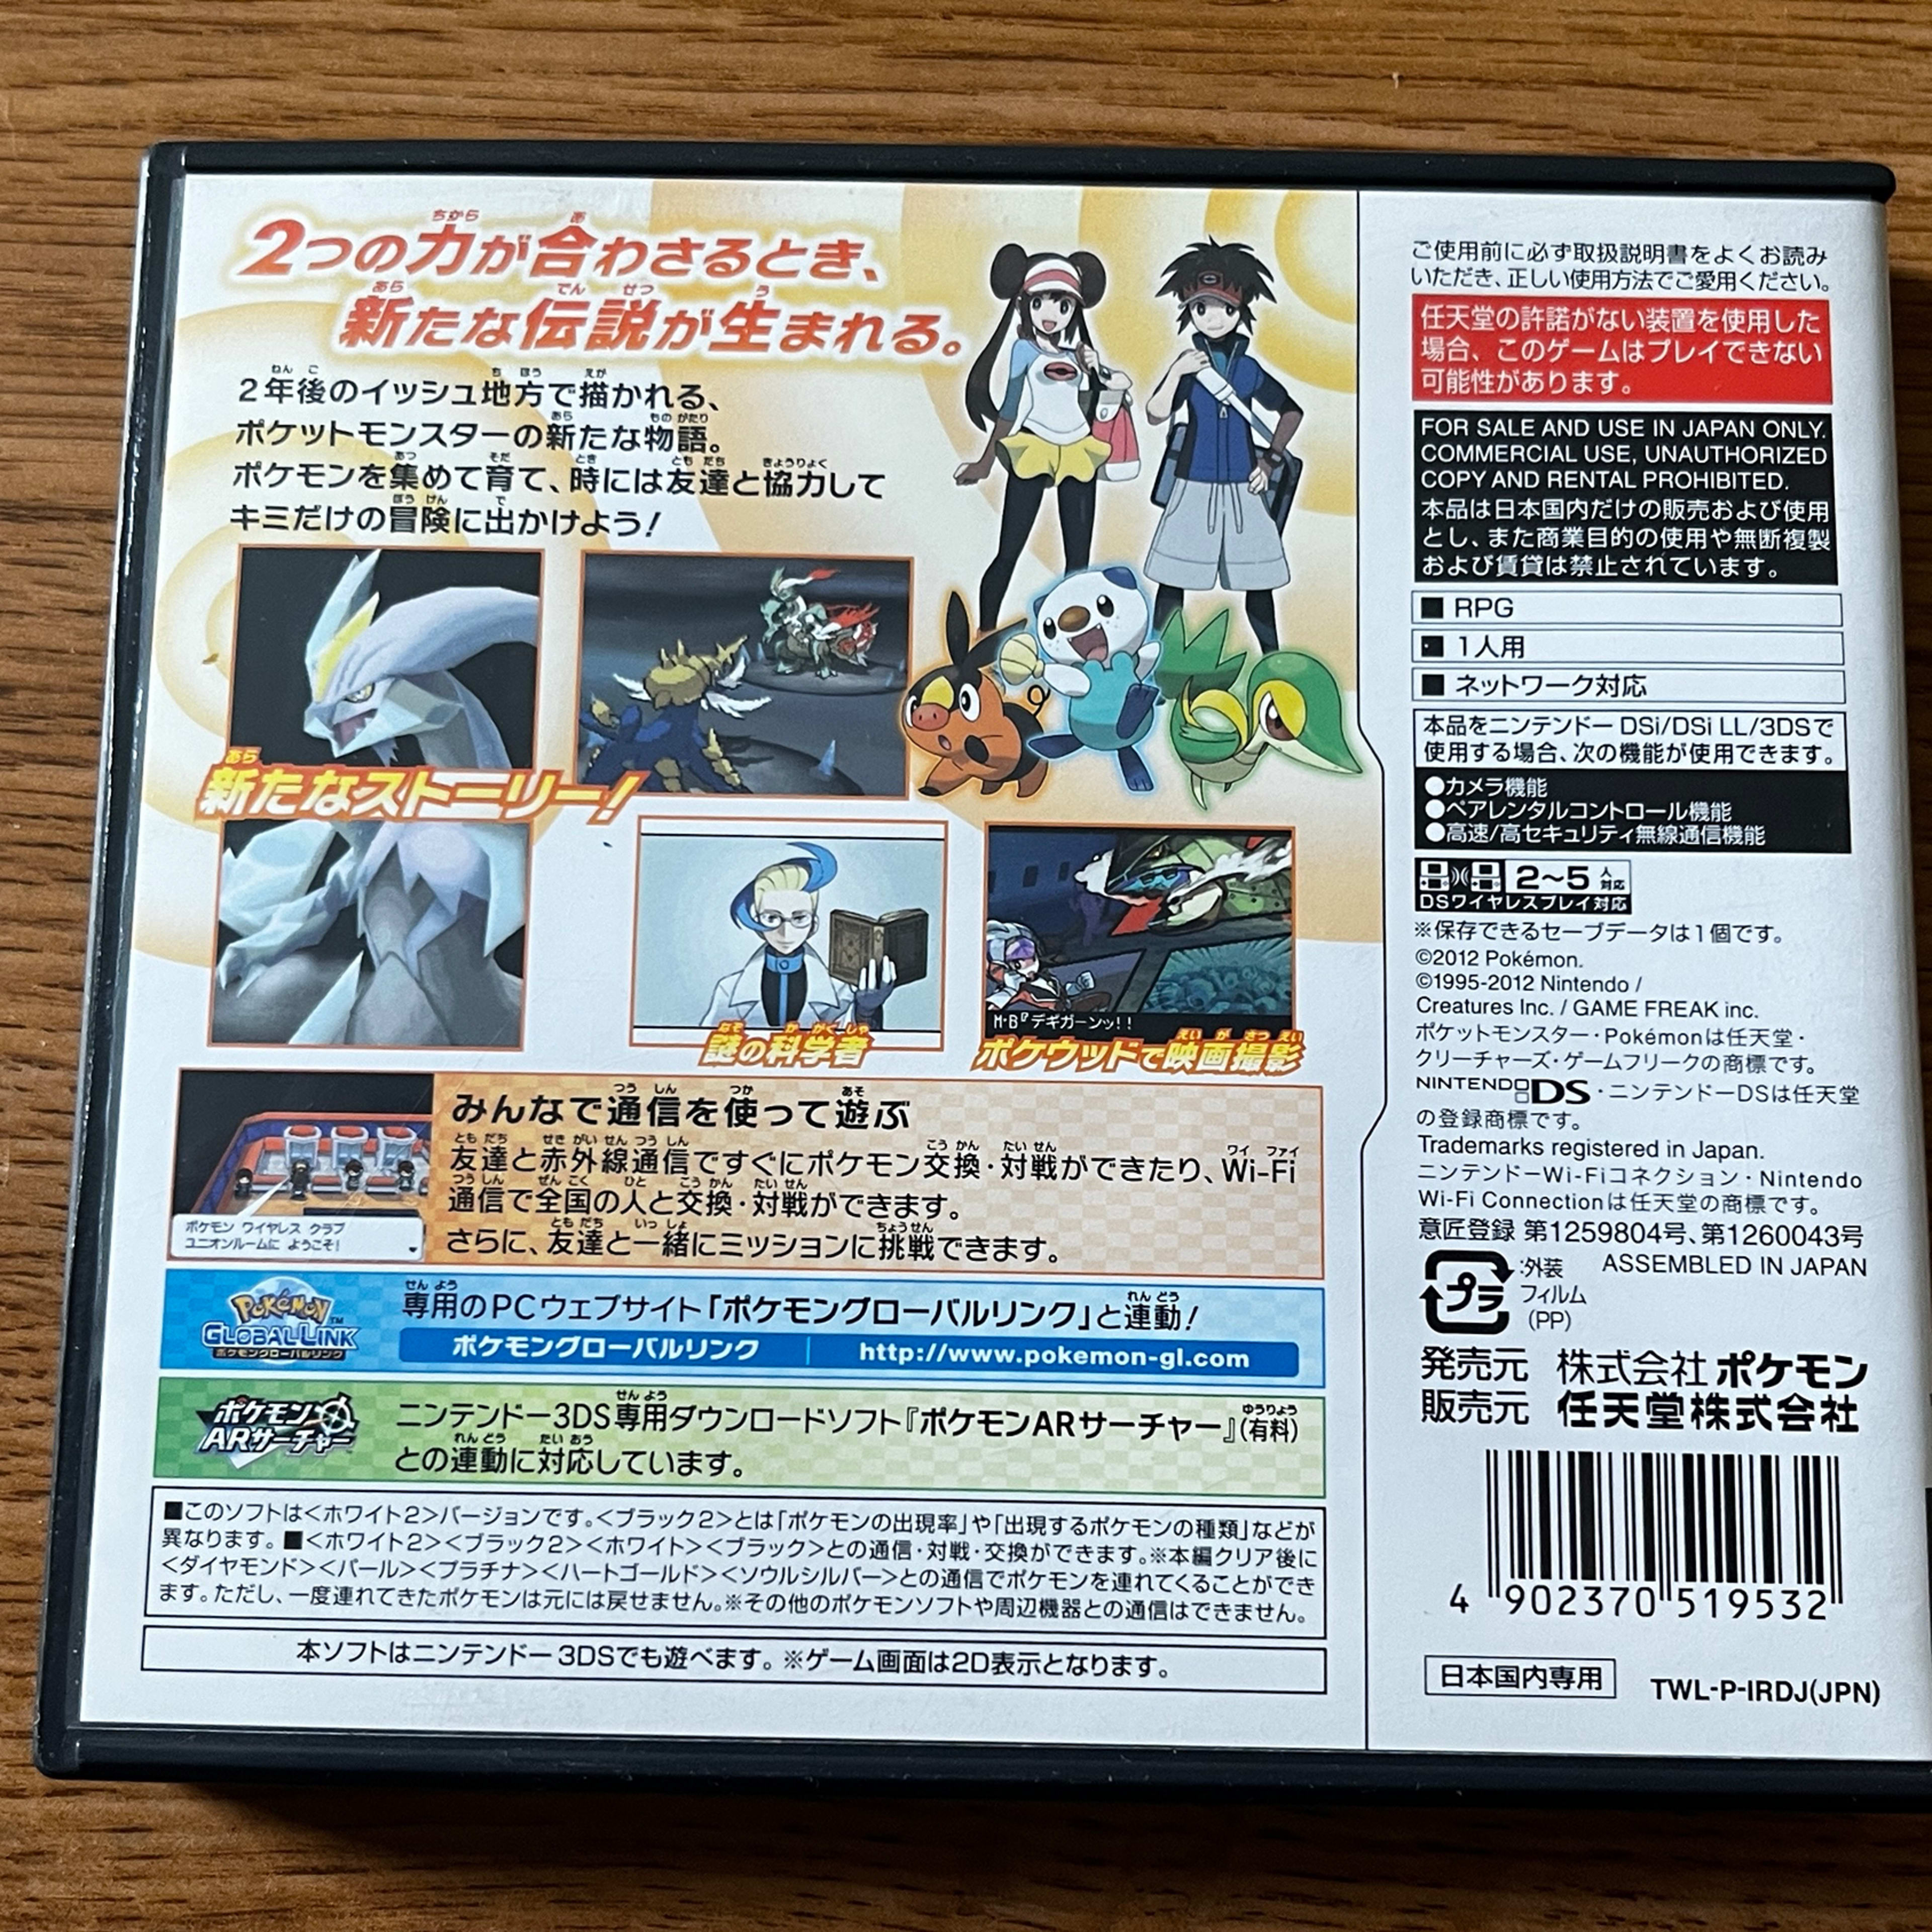 Pokemon: White Version 2 for Nintendo DS - Japan Copy